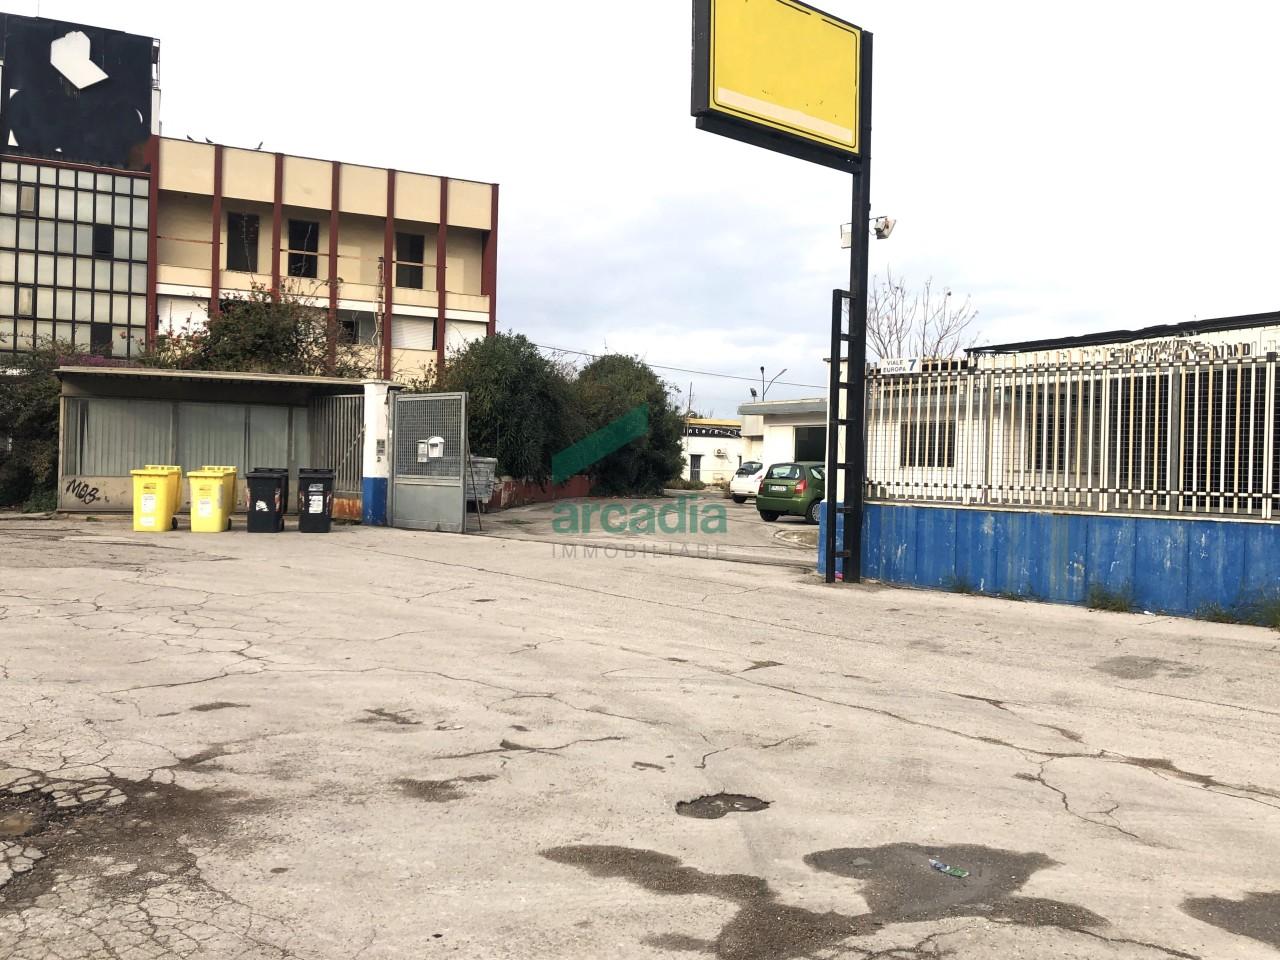 Vendita Industriale, Bari foto